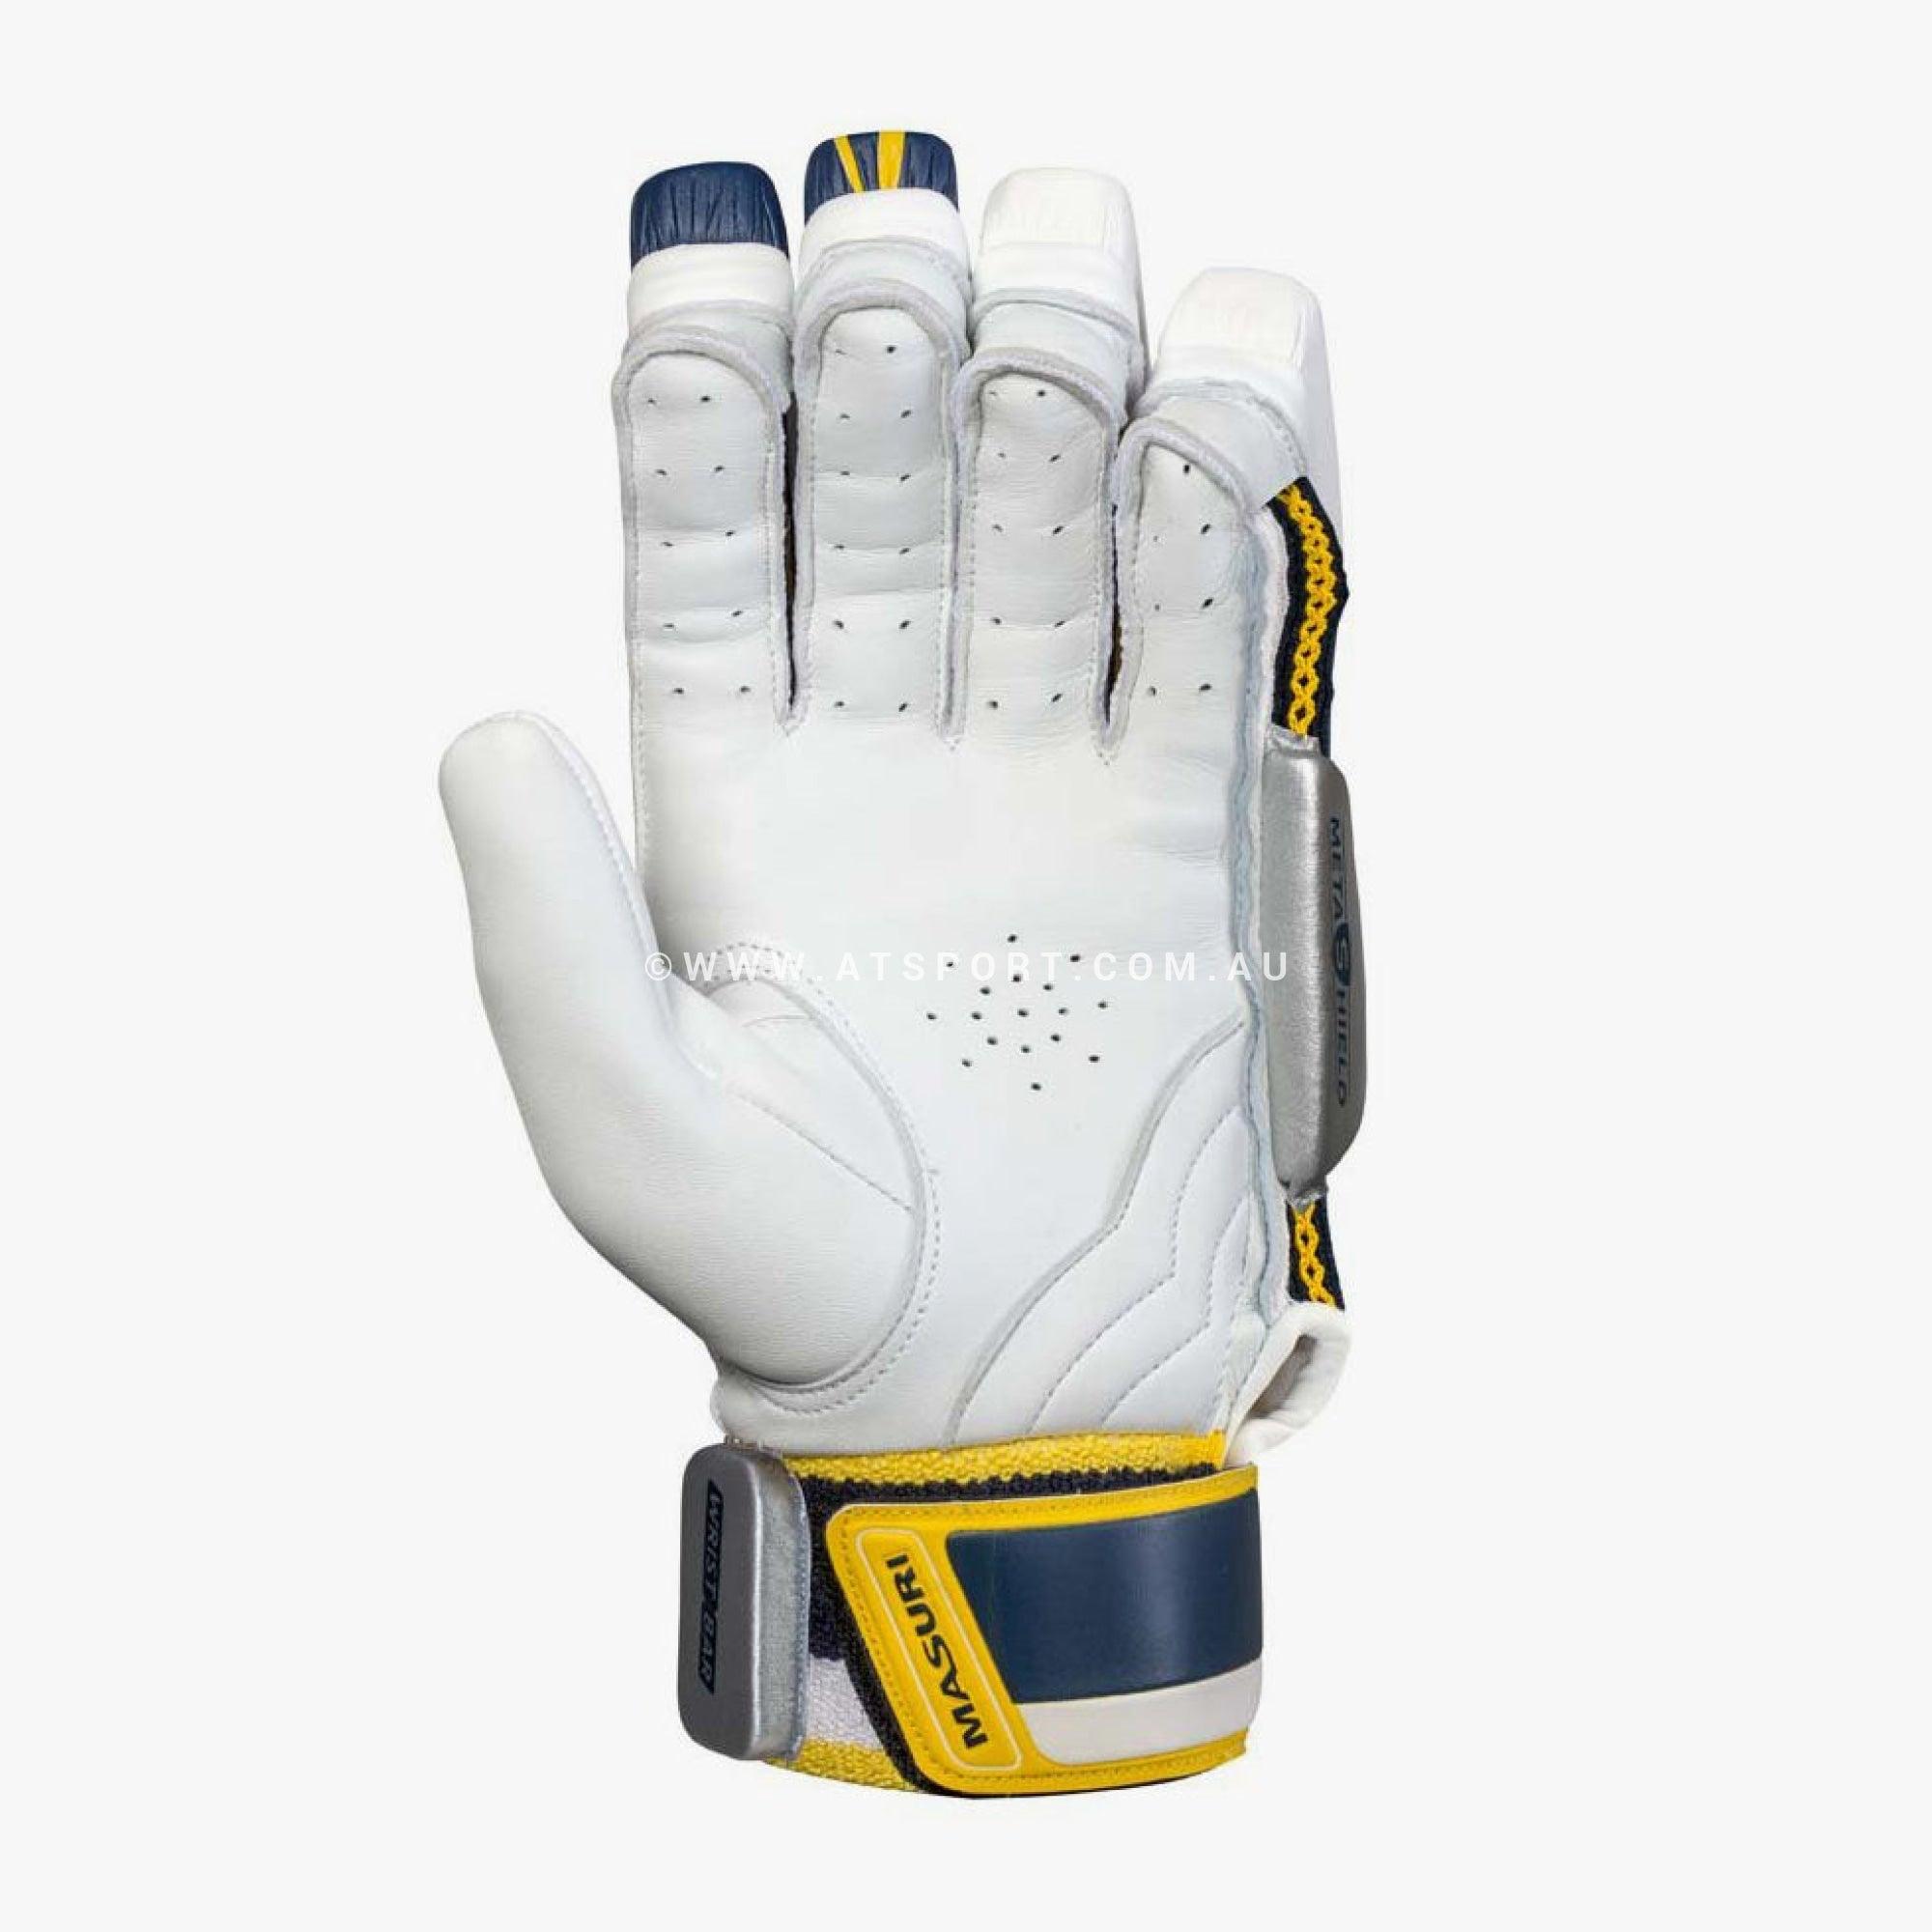 Masuri E LINE PRO Cricket Batting Gloves - ADULT - AT Sports